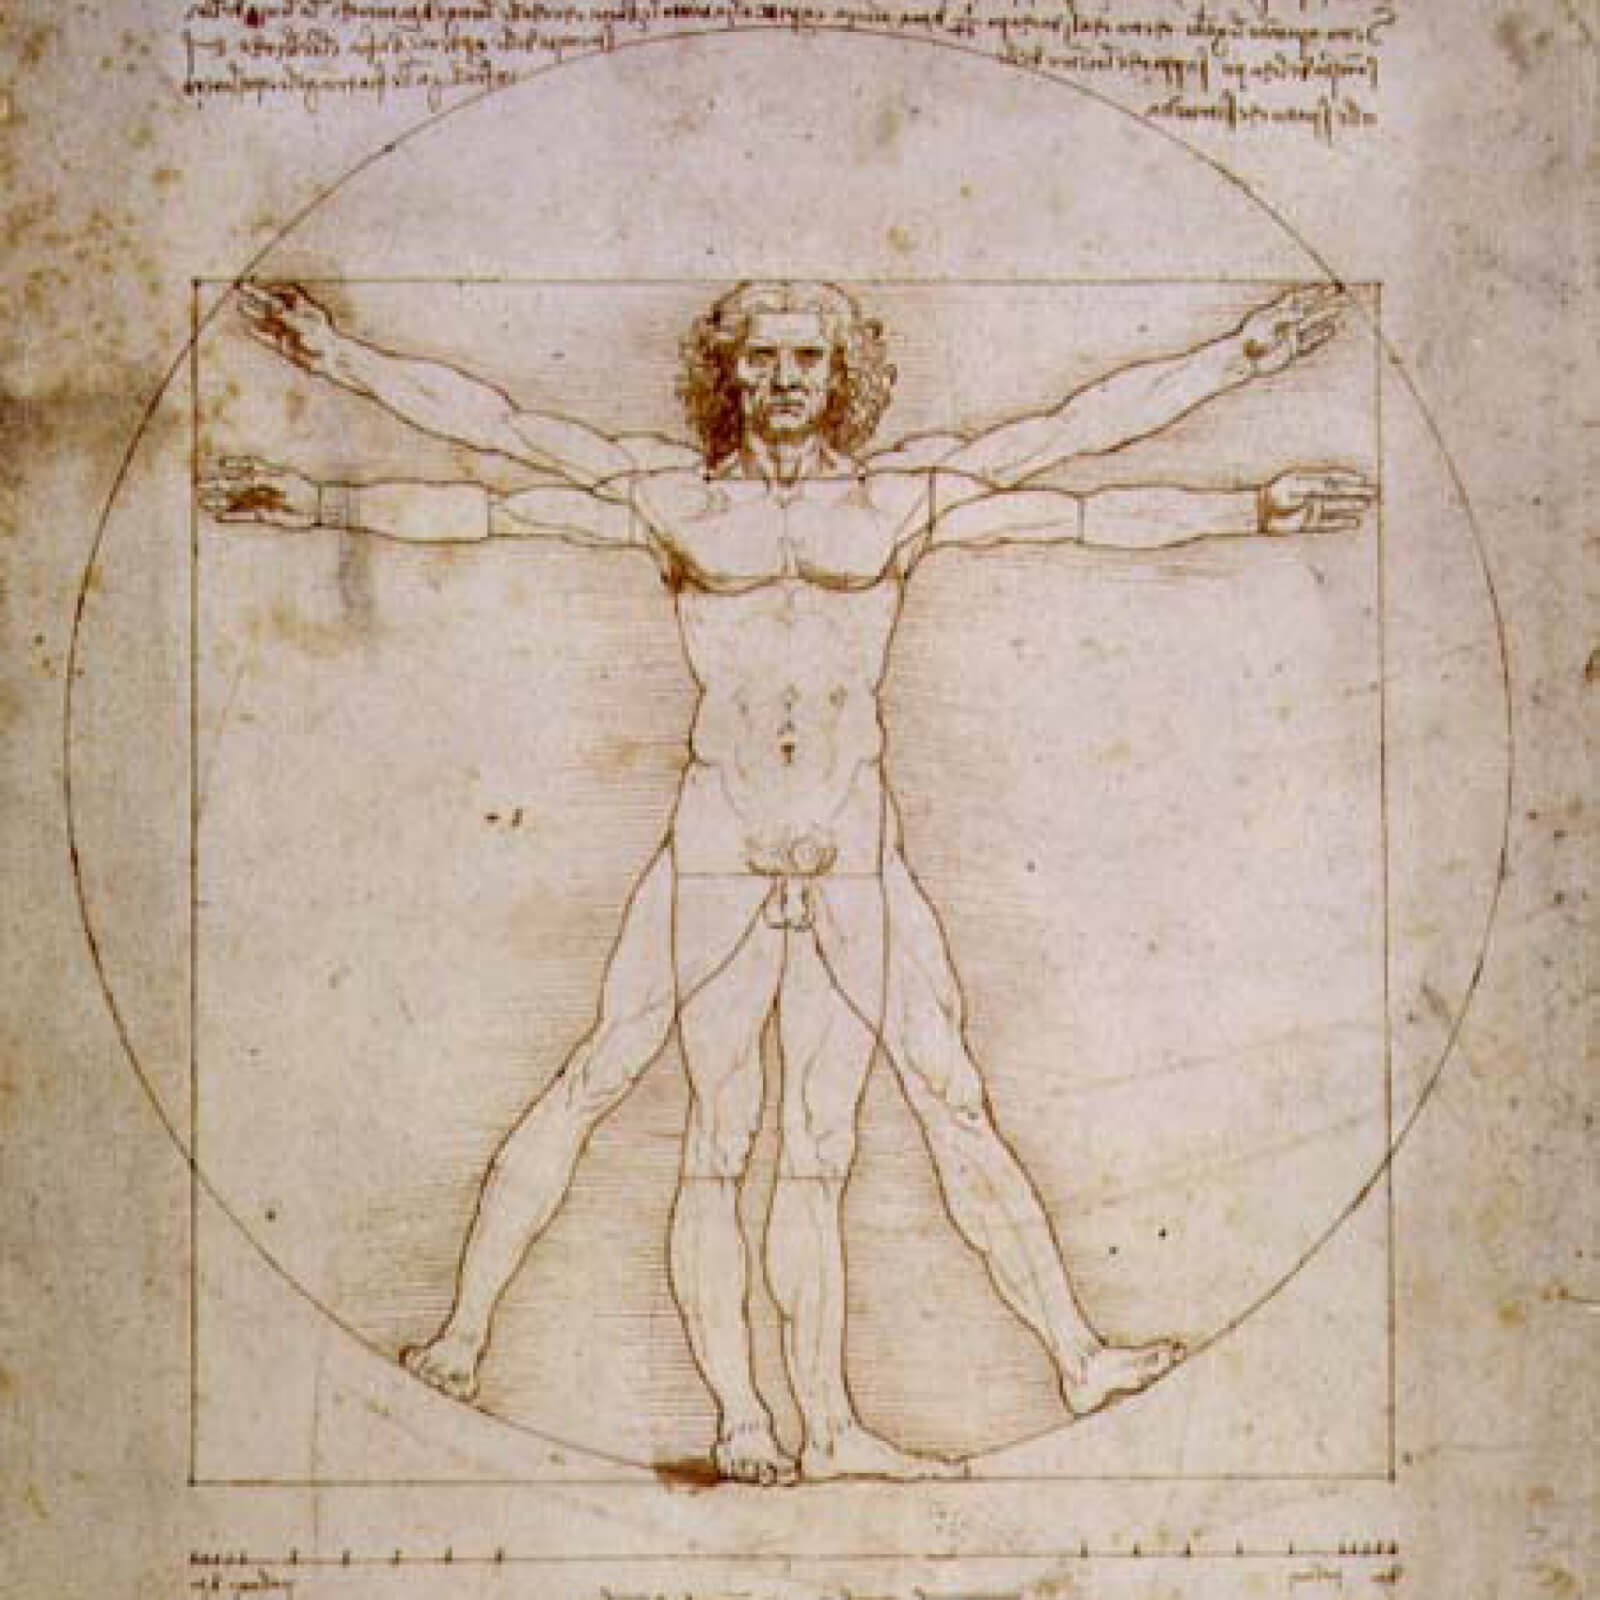 An illustrated image of Leonardo Da Vinci's Vitruvian Man